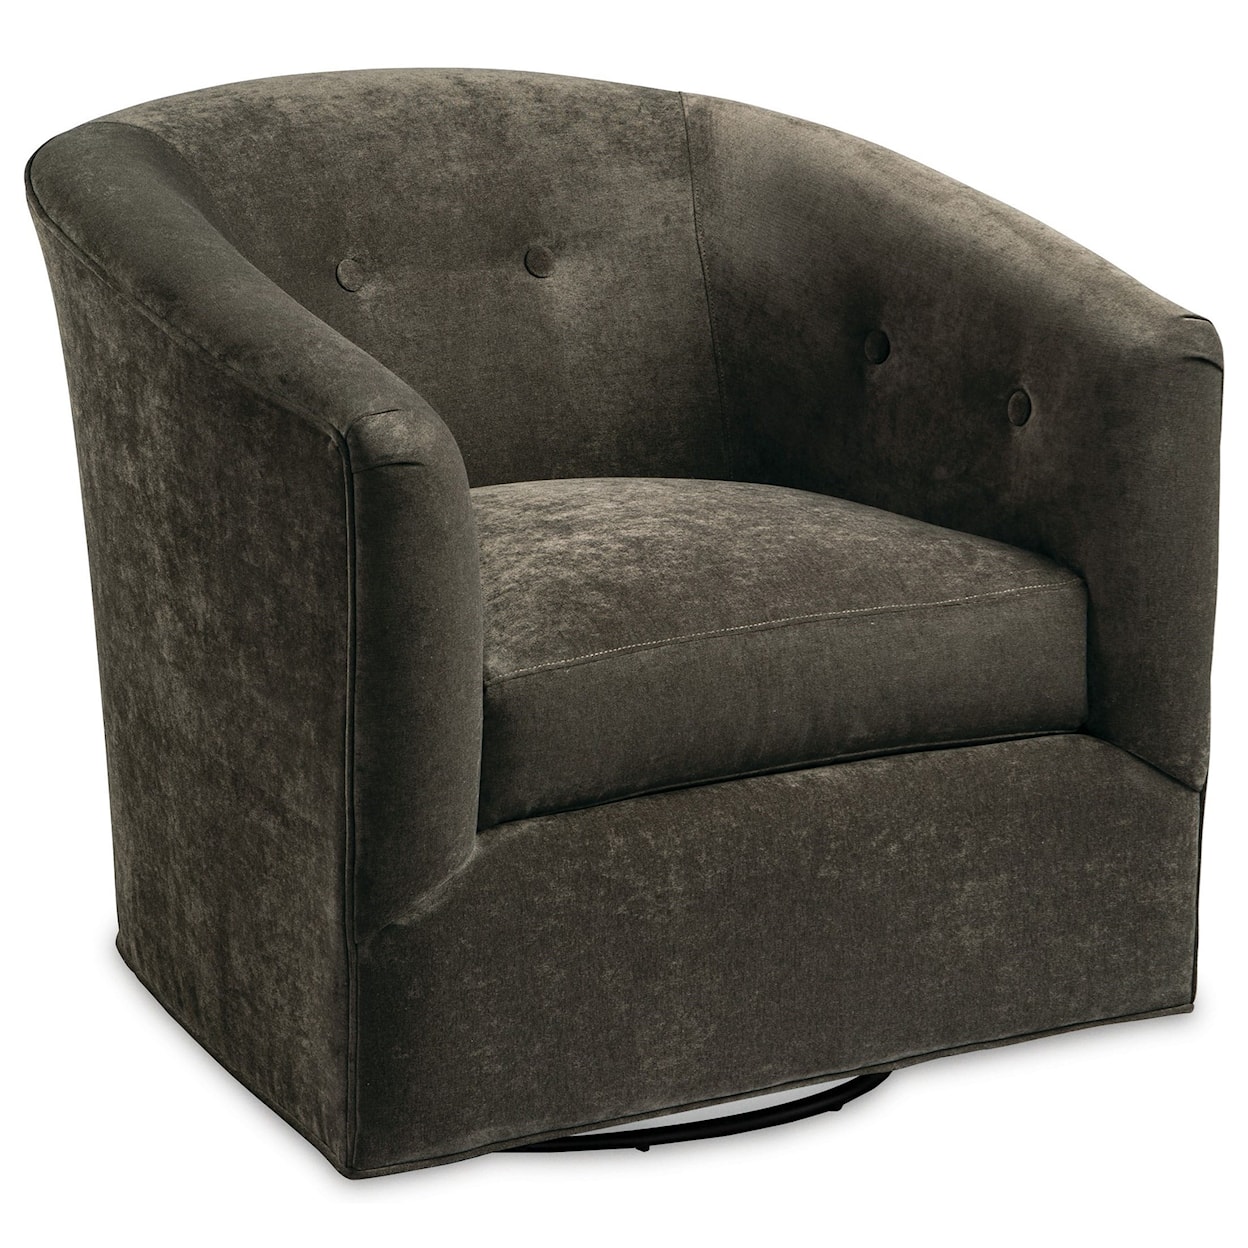 Craftmaster 094110 Swivel Chair